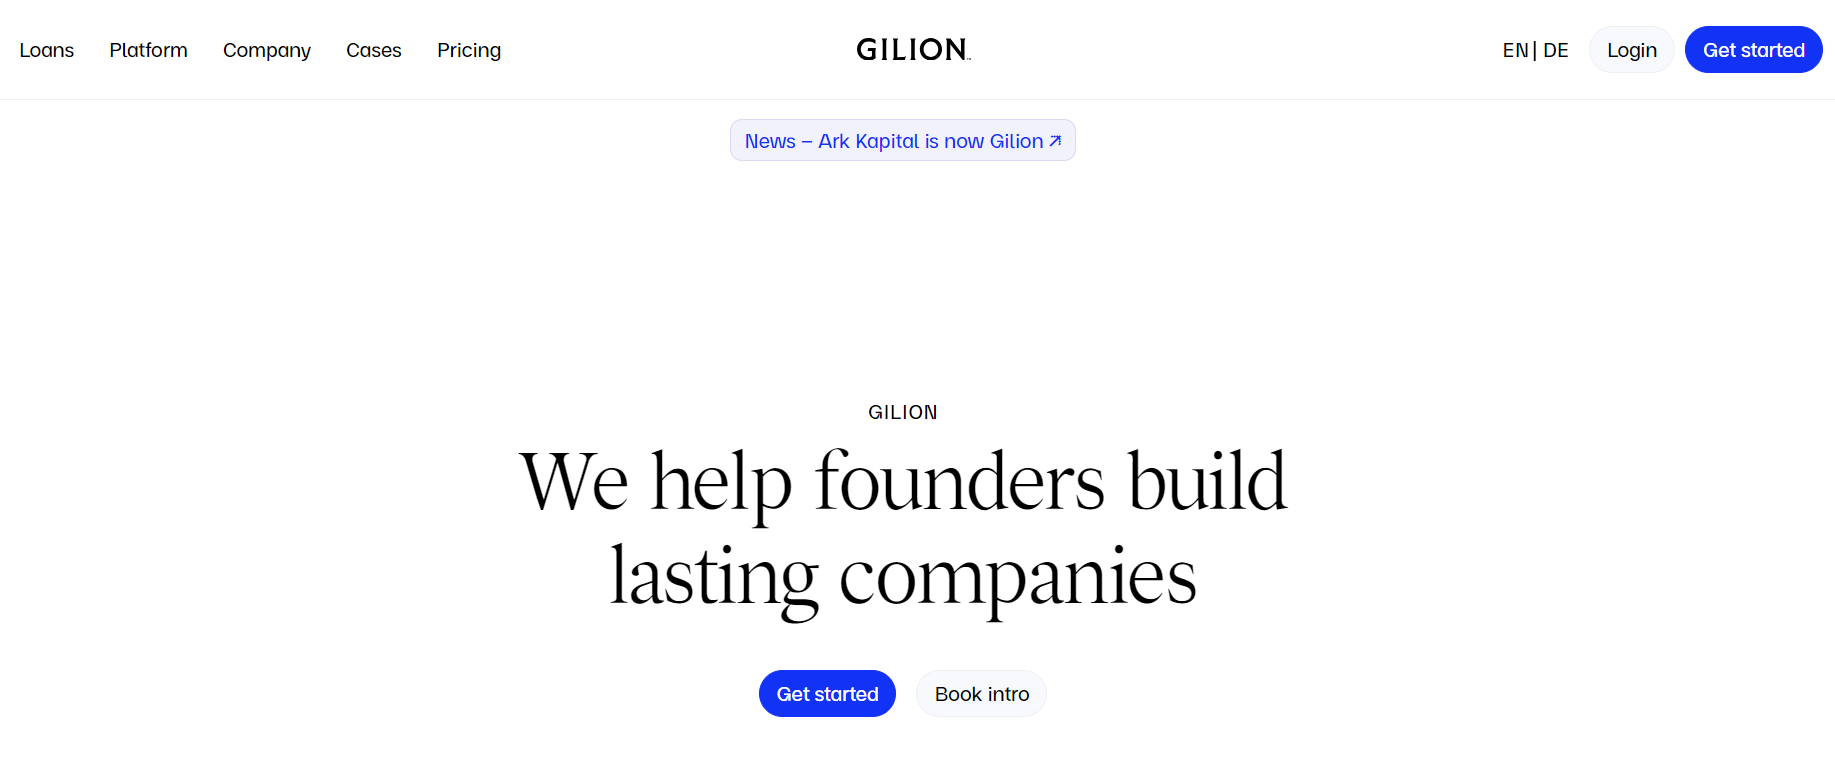 Ark Kapital Rebrands to Gilion